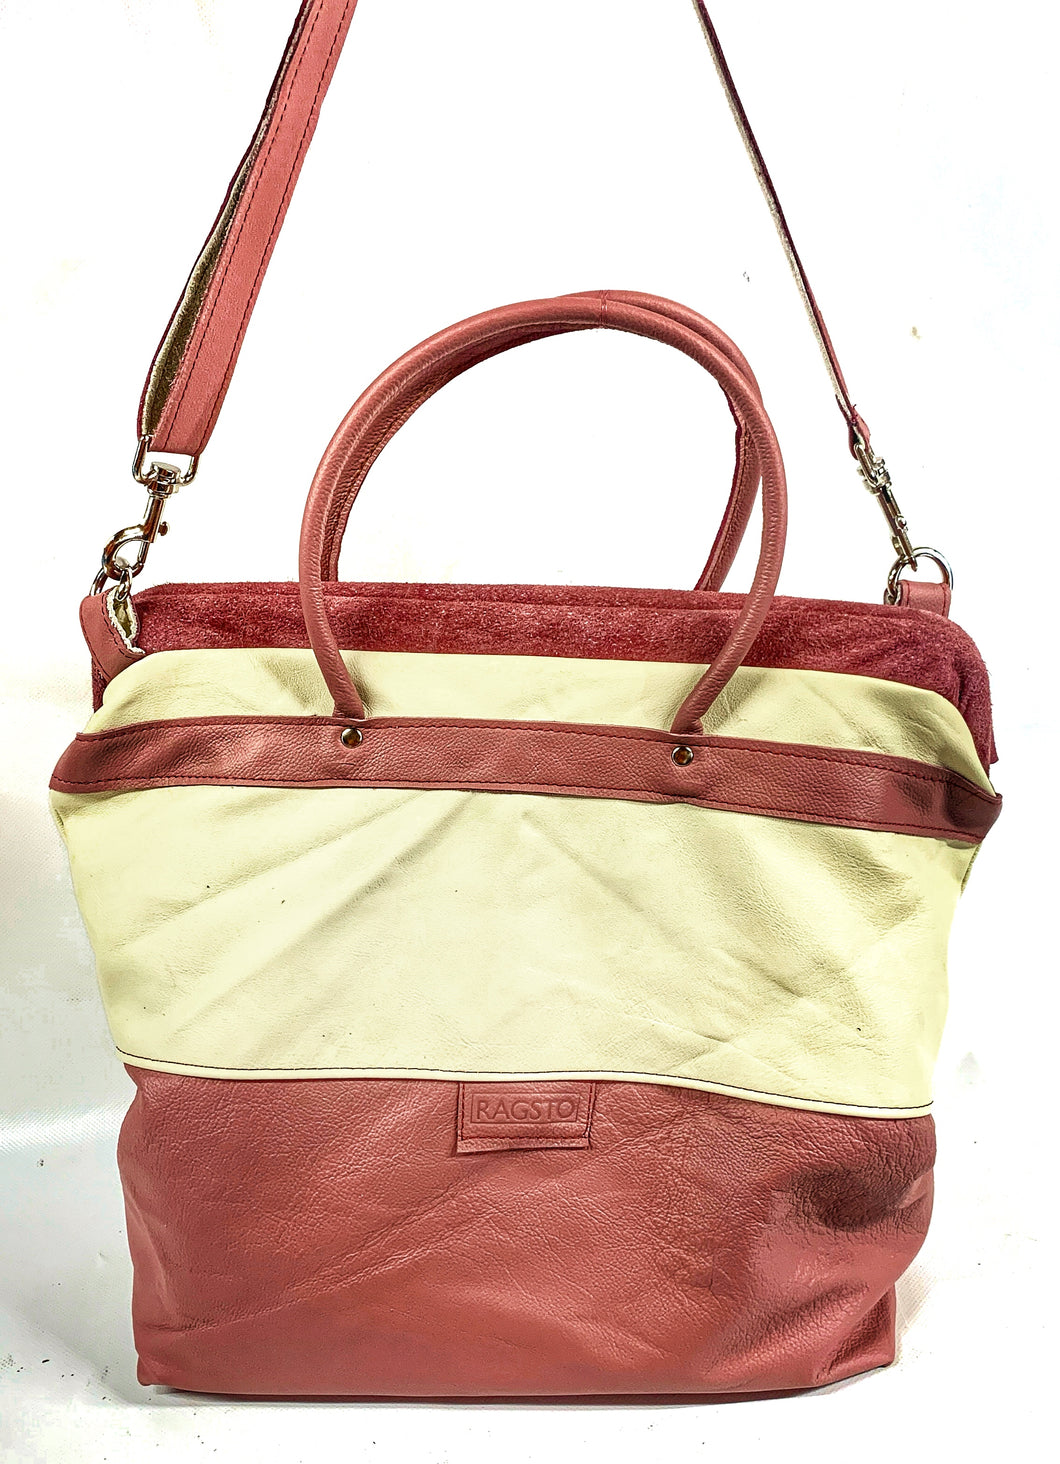 Dusky Pink & Cream leather Mary Poppins style Gladstone Bag